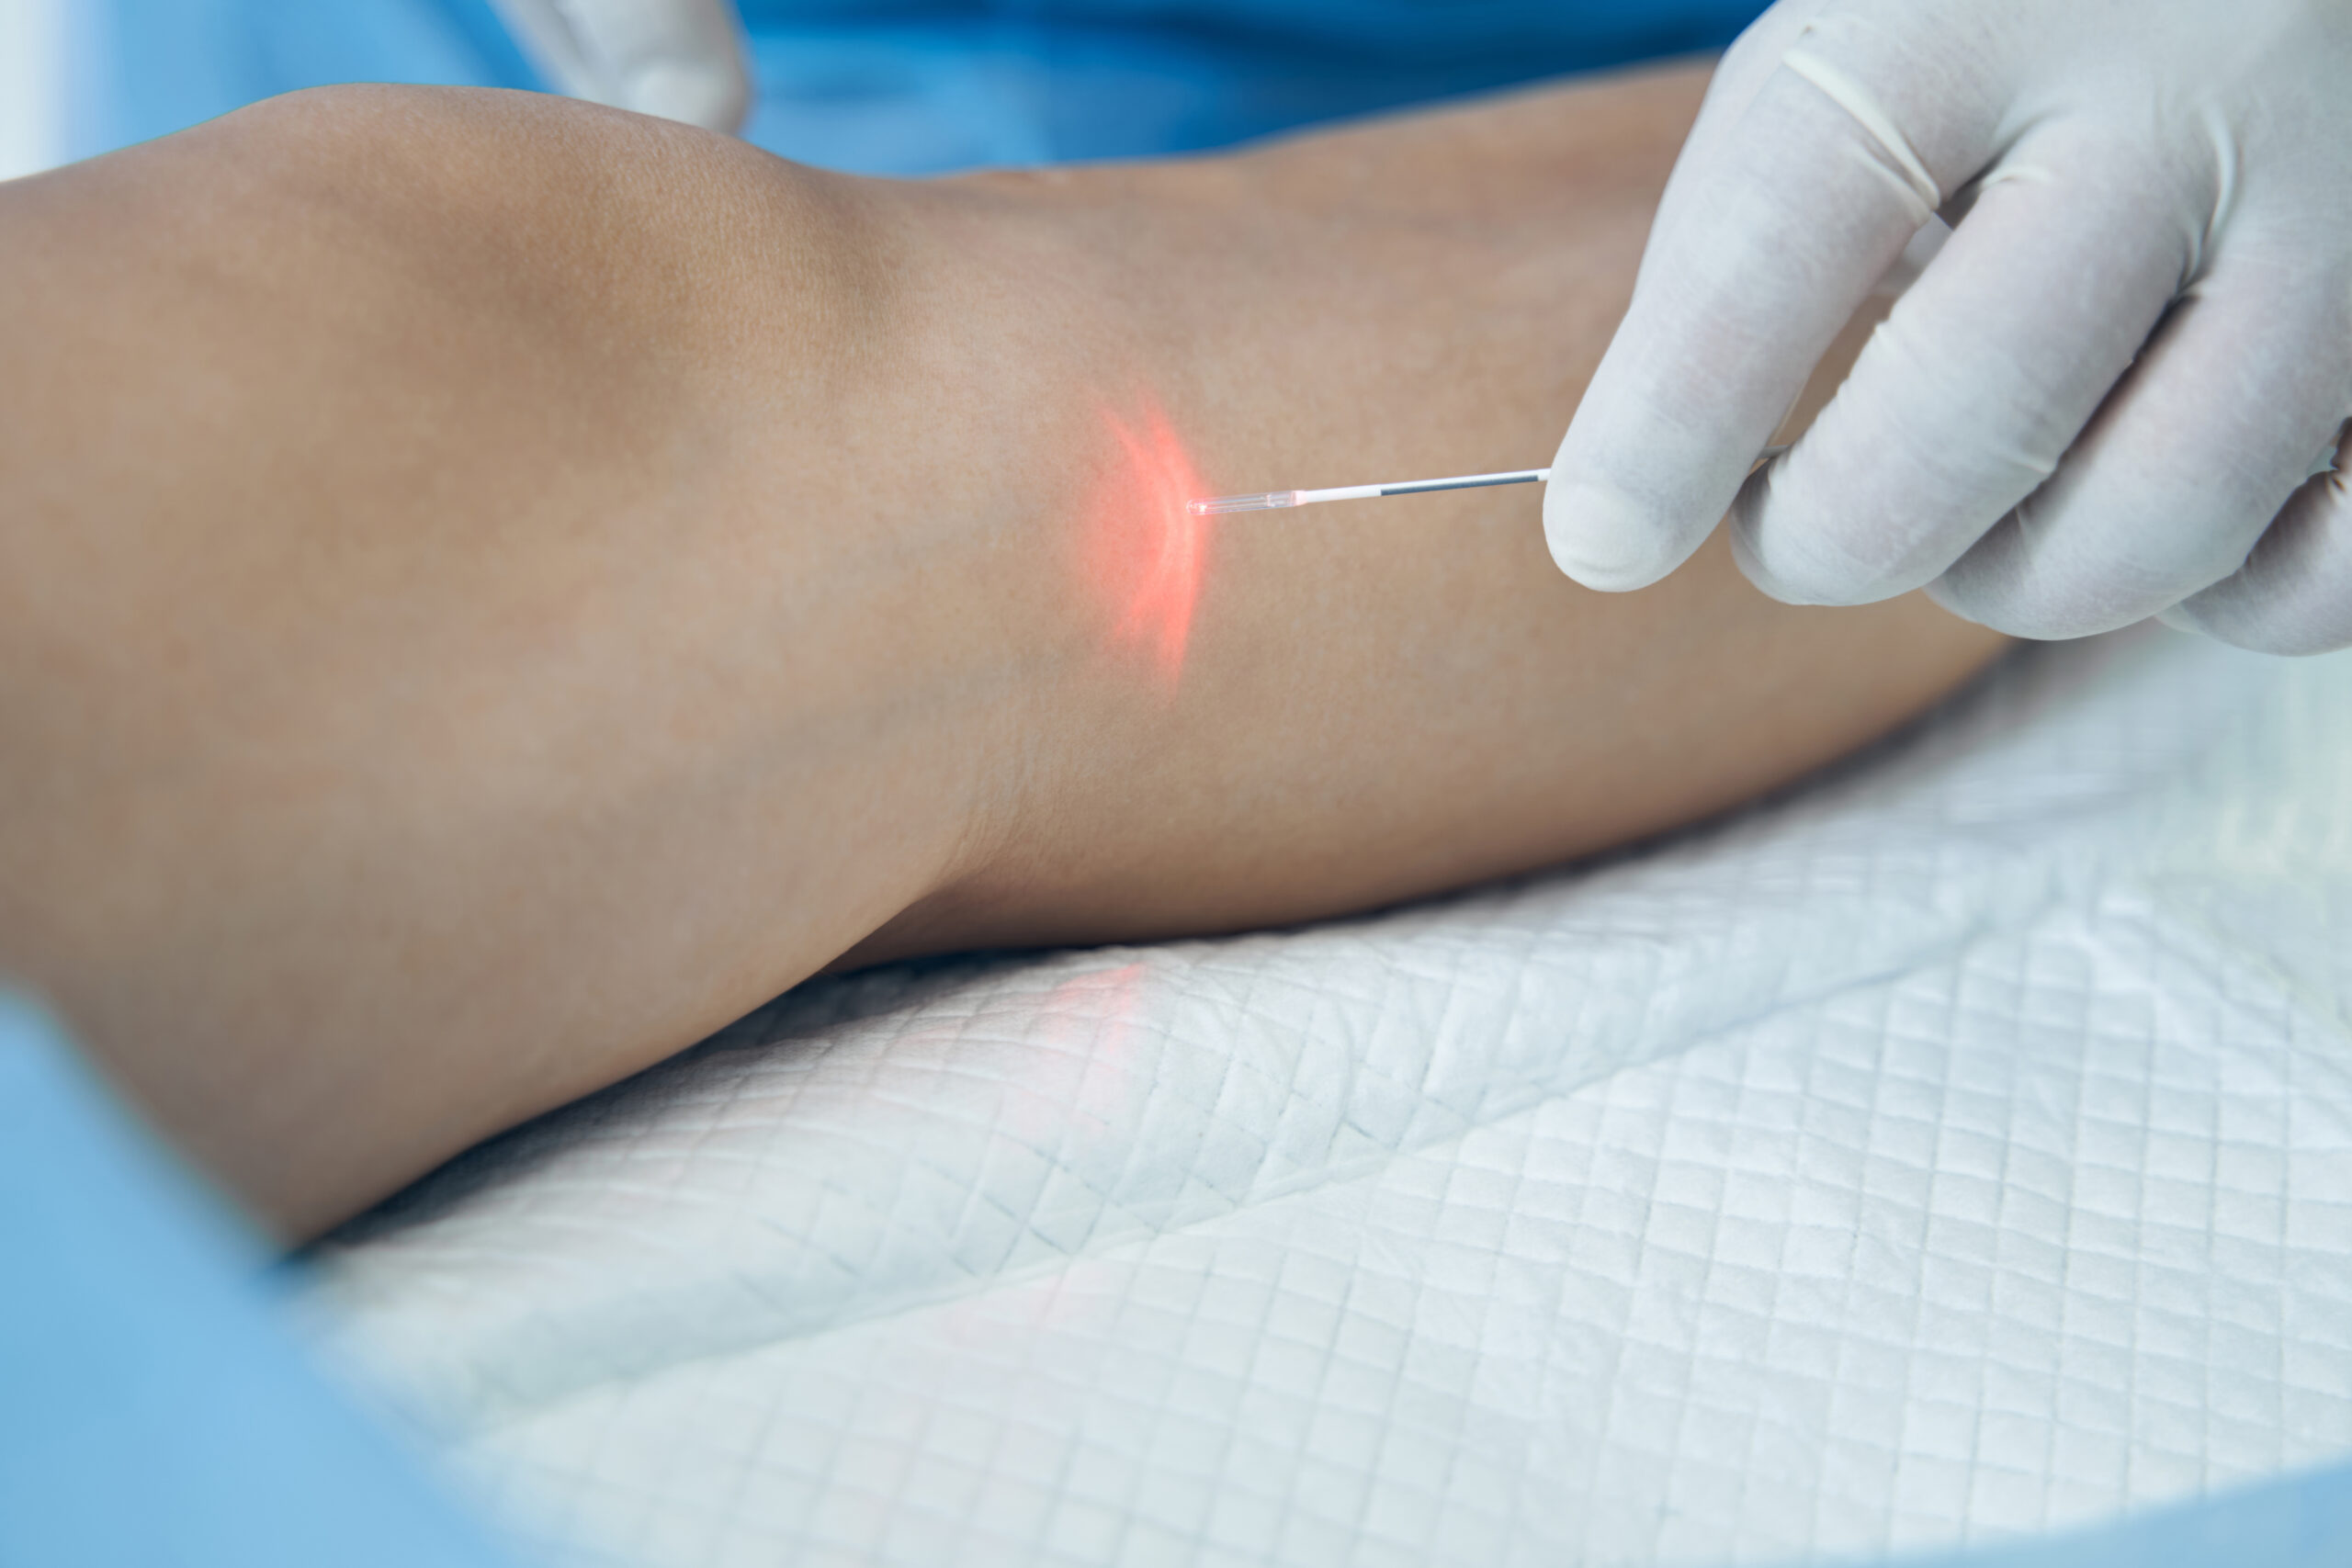 Endovenous laser treatment of the leg vein in hospital